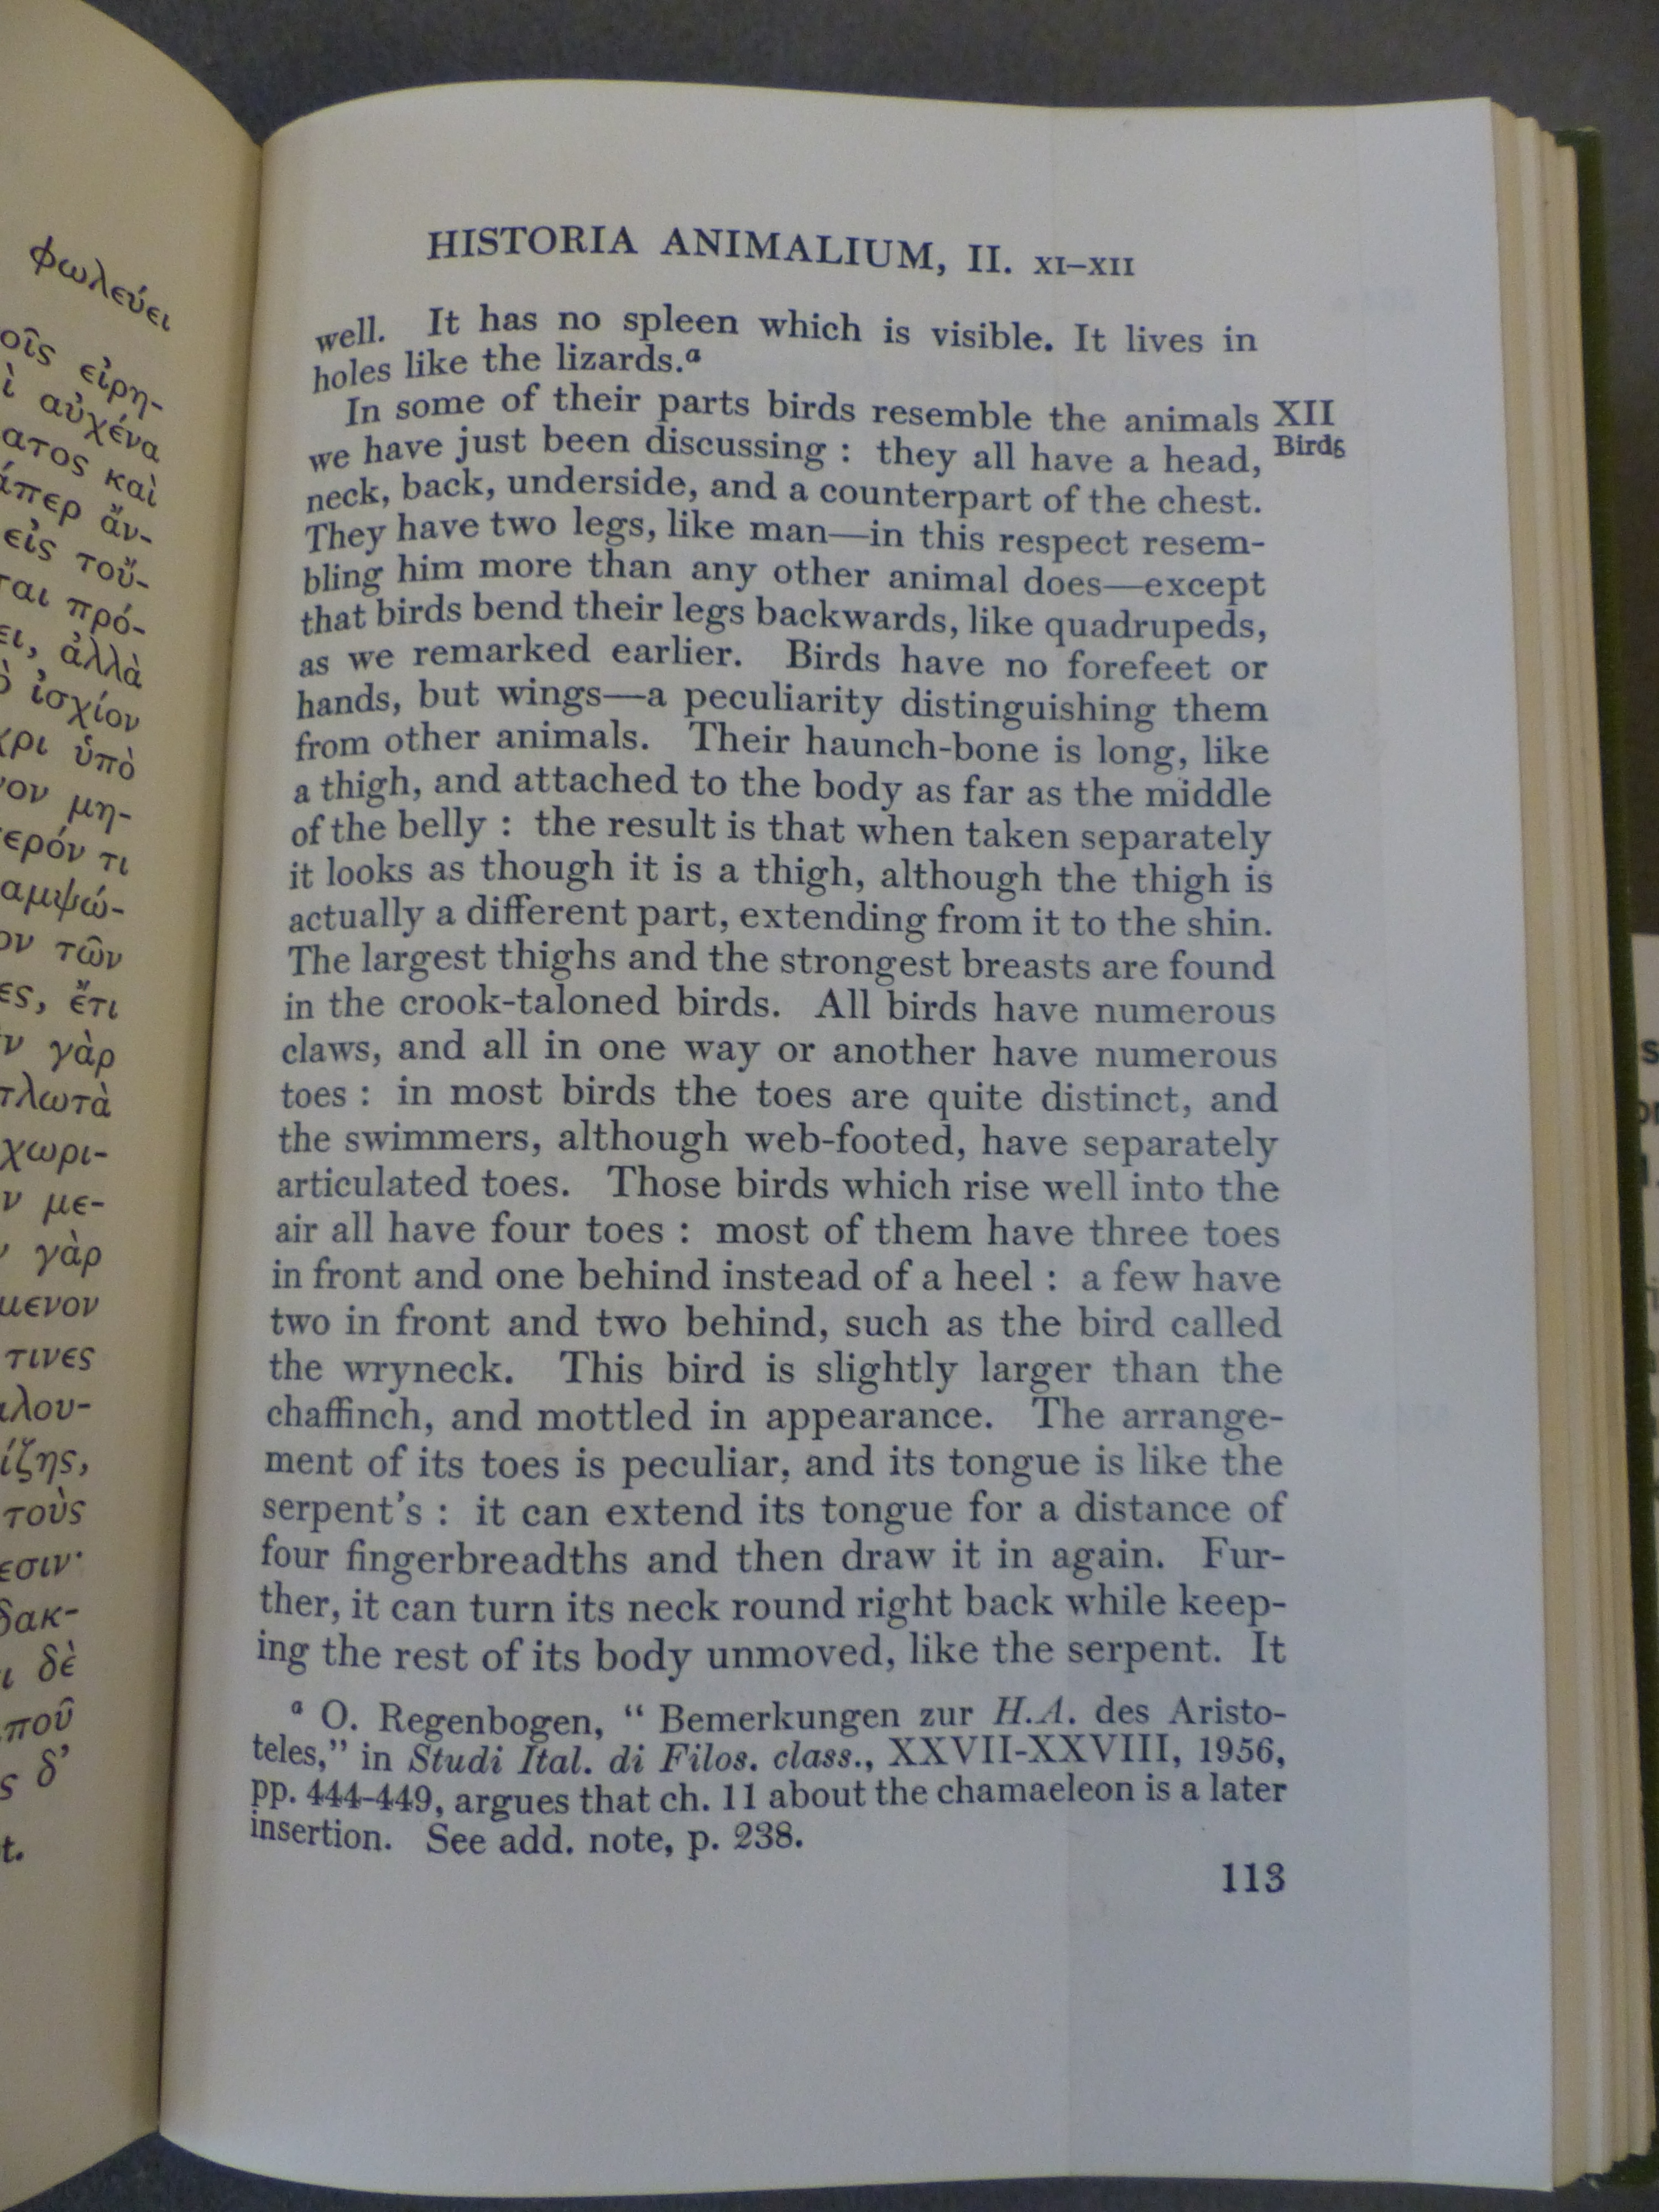 Historia animalium: Books I-III / Aristotle V1.ARI 2.1b